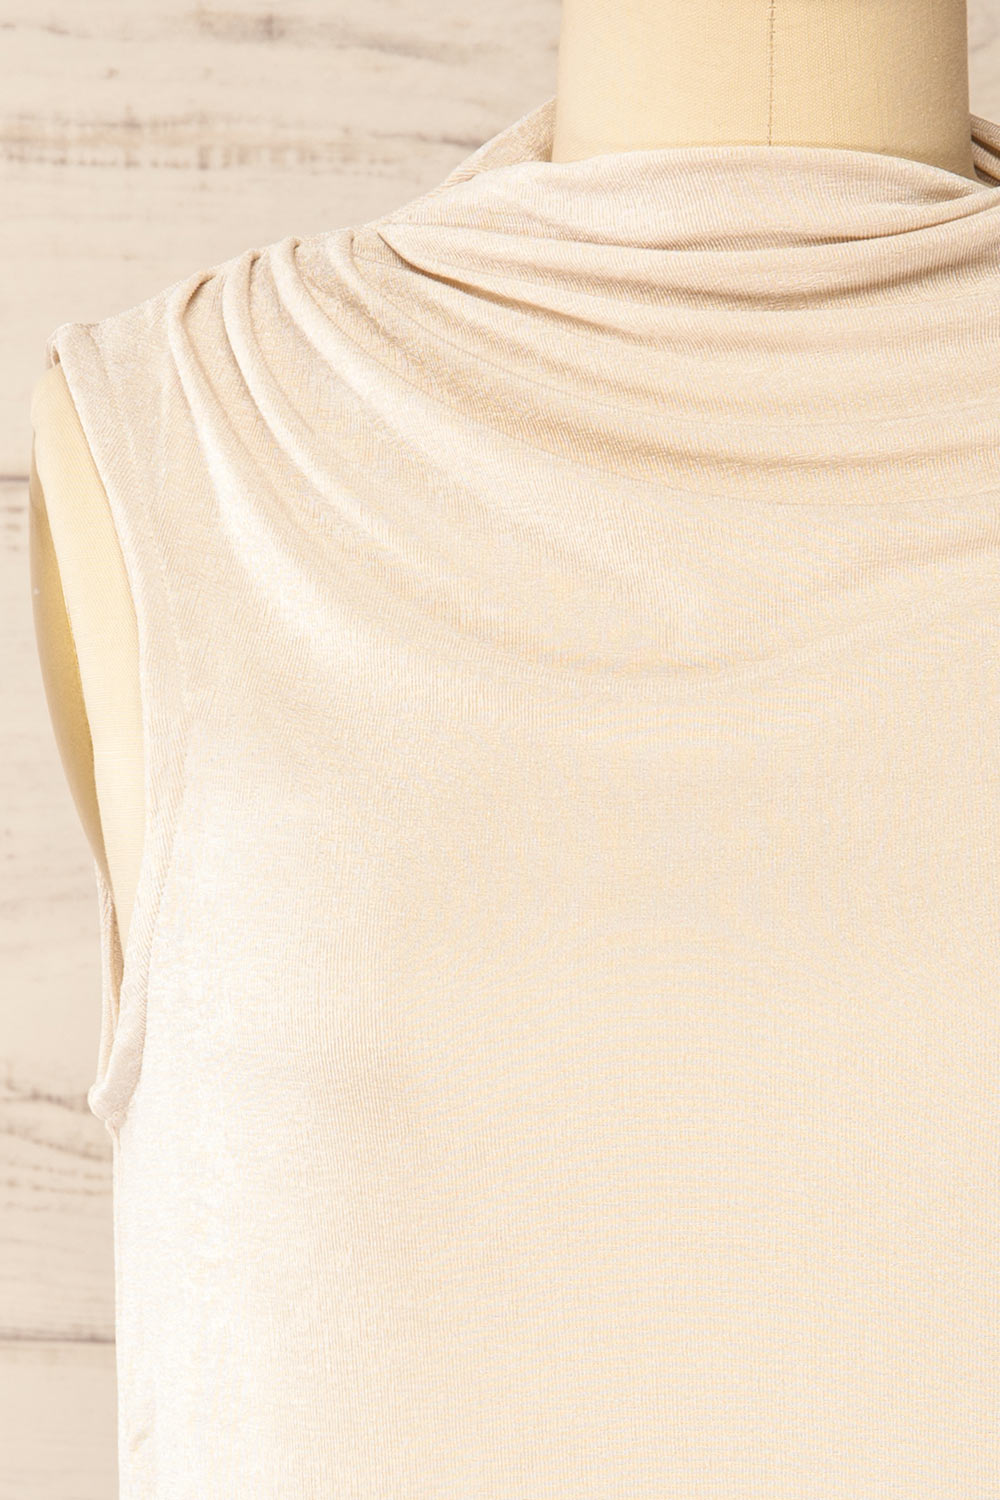 Tapshap Ivory Sleeveless Top w/ Draped Mock Neck | La petite garçonne front close-up